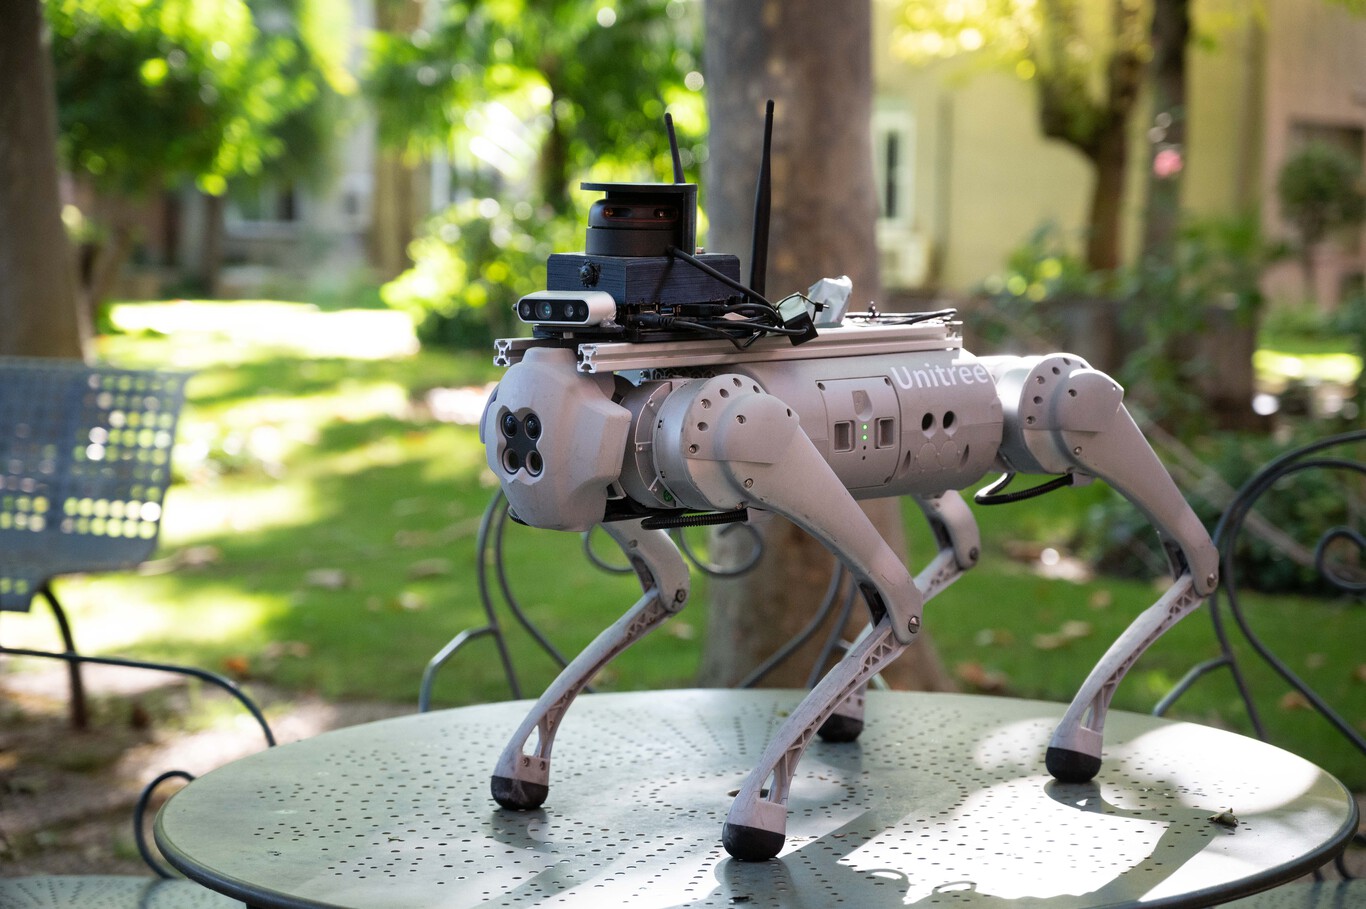 Han creado perro robot lazarillo que guía a los usuarios gracias a Google Maps